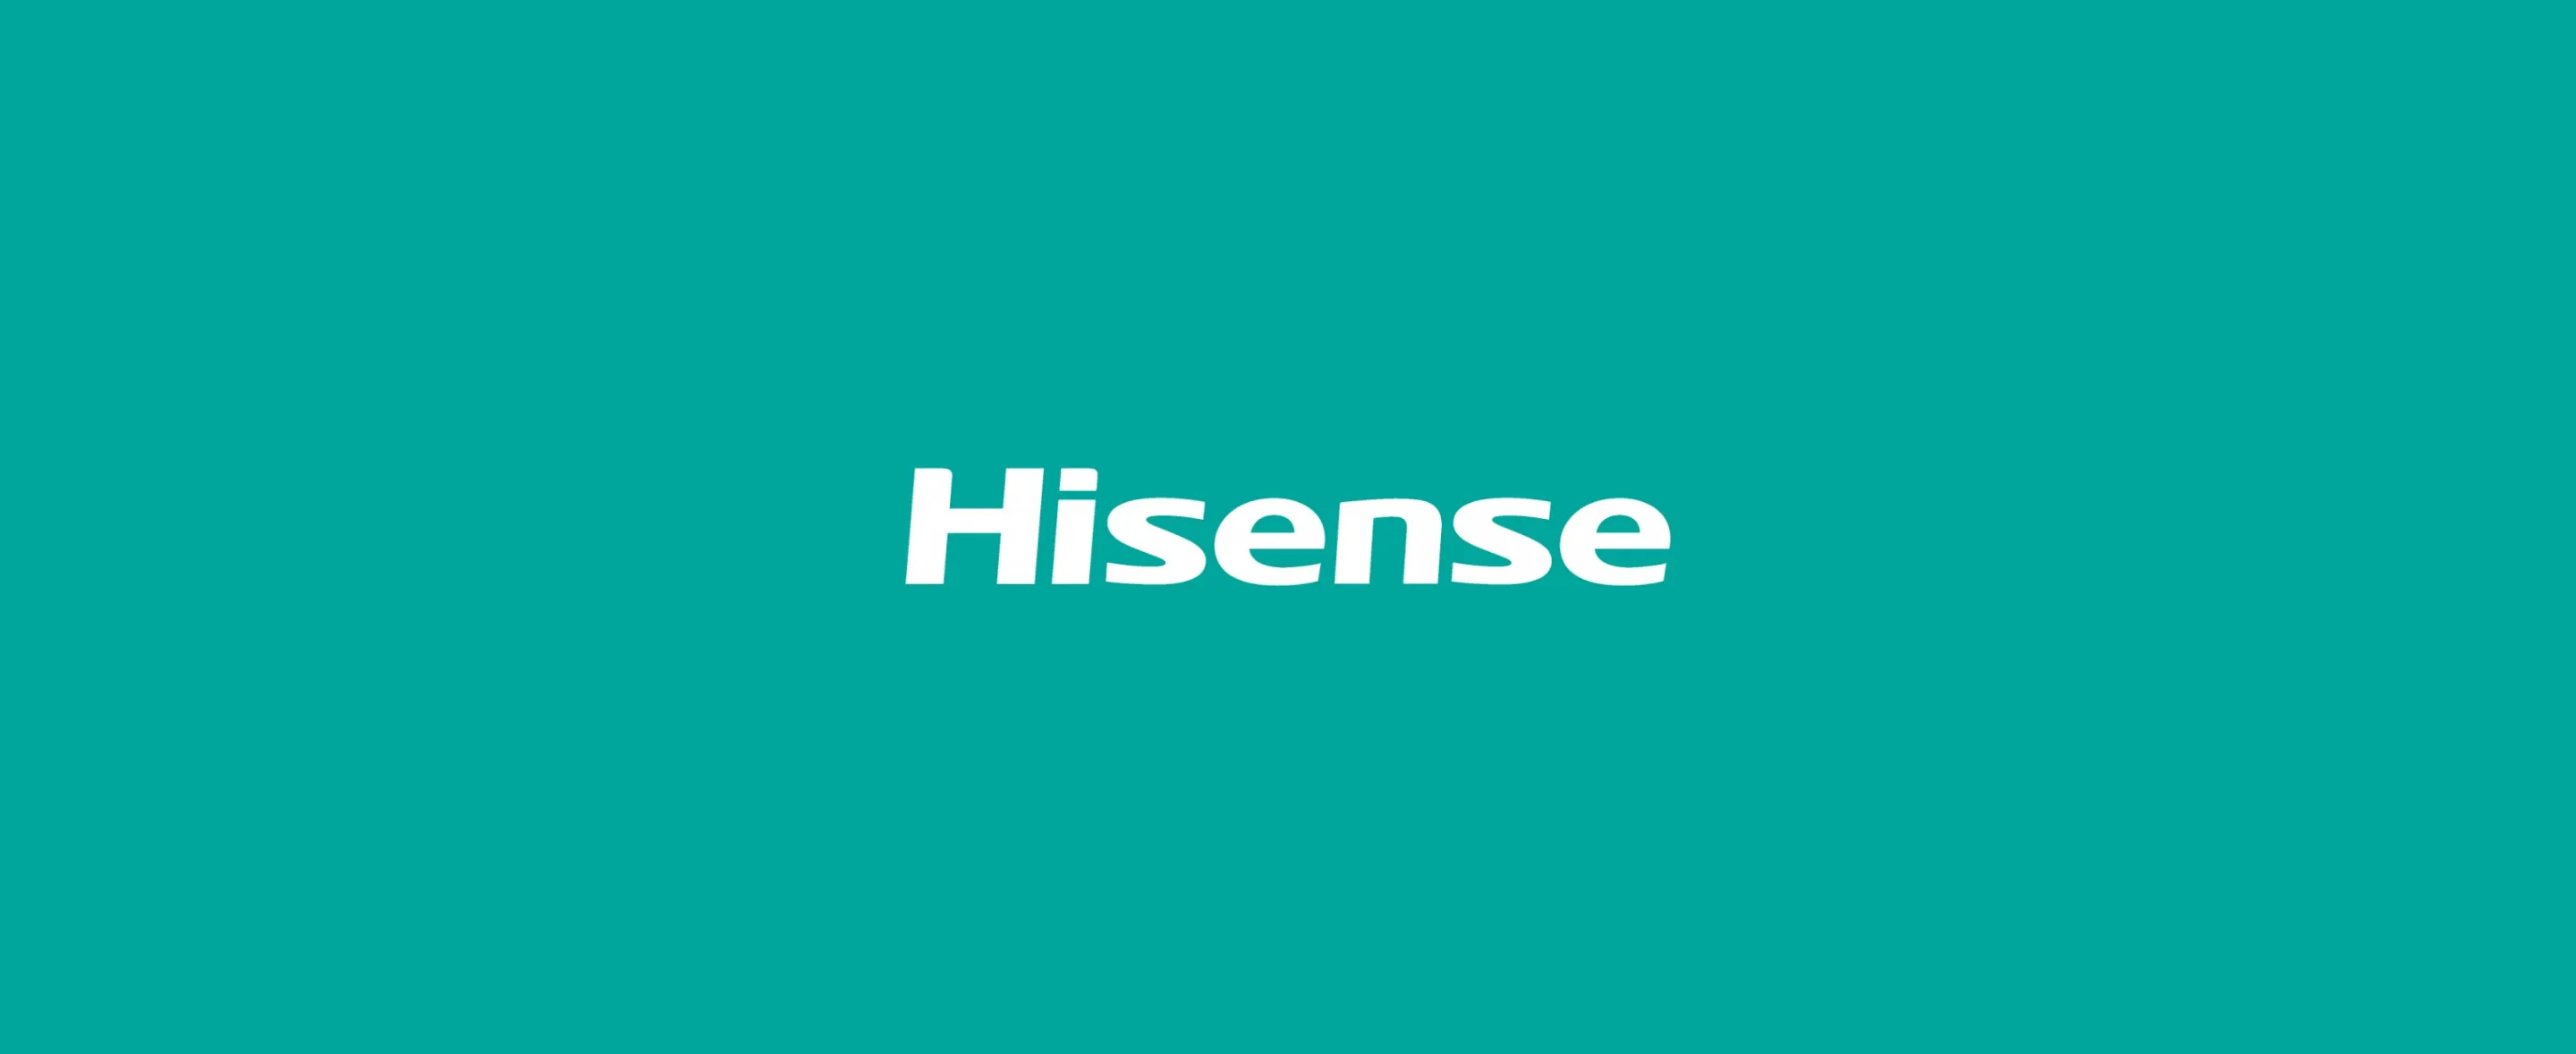 Hisense Image